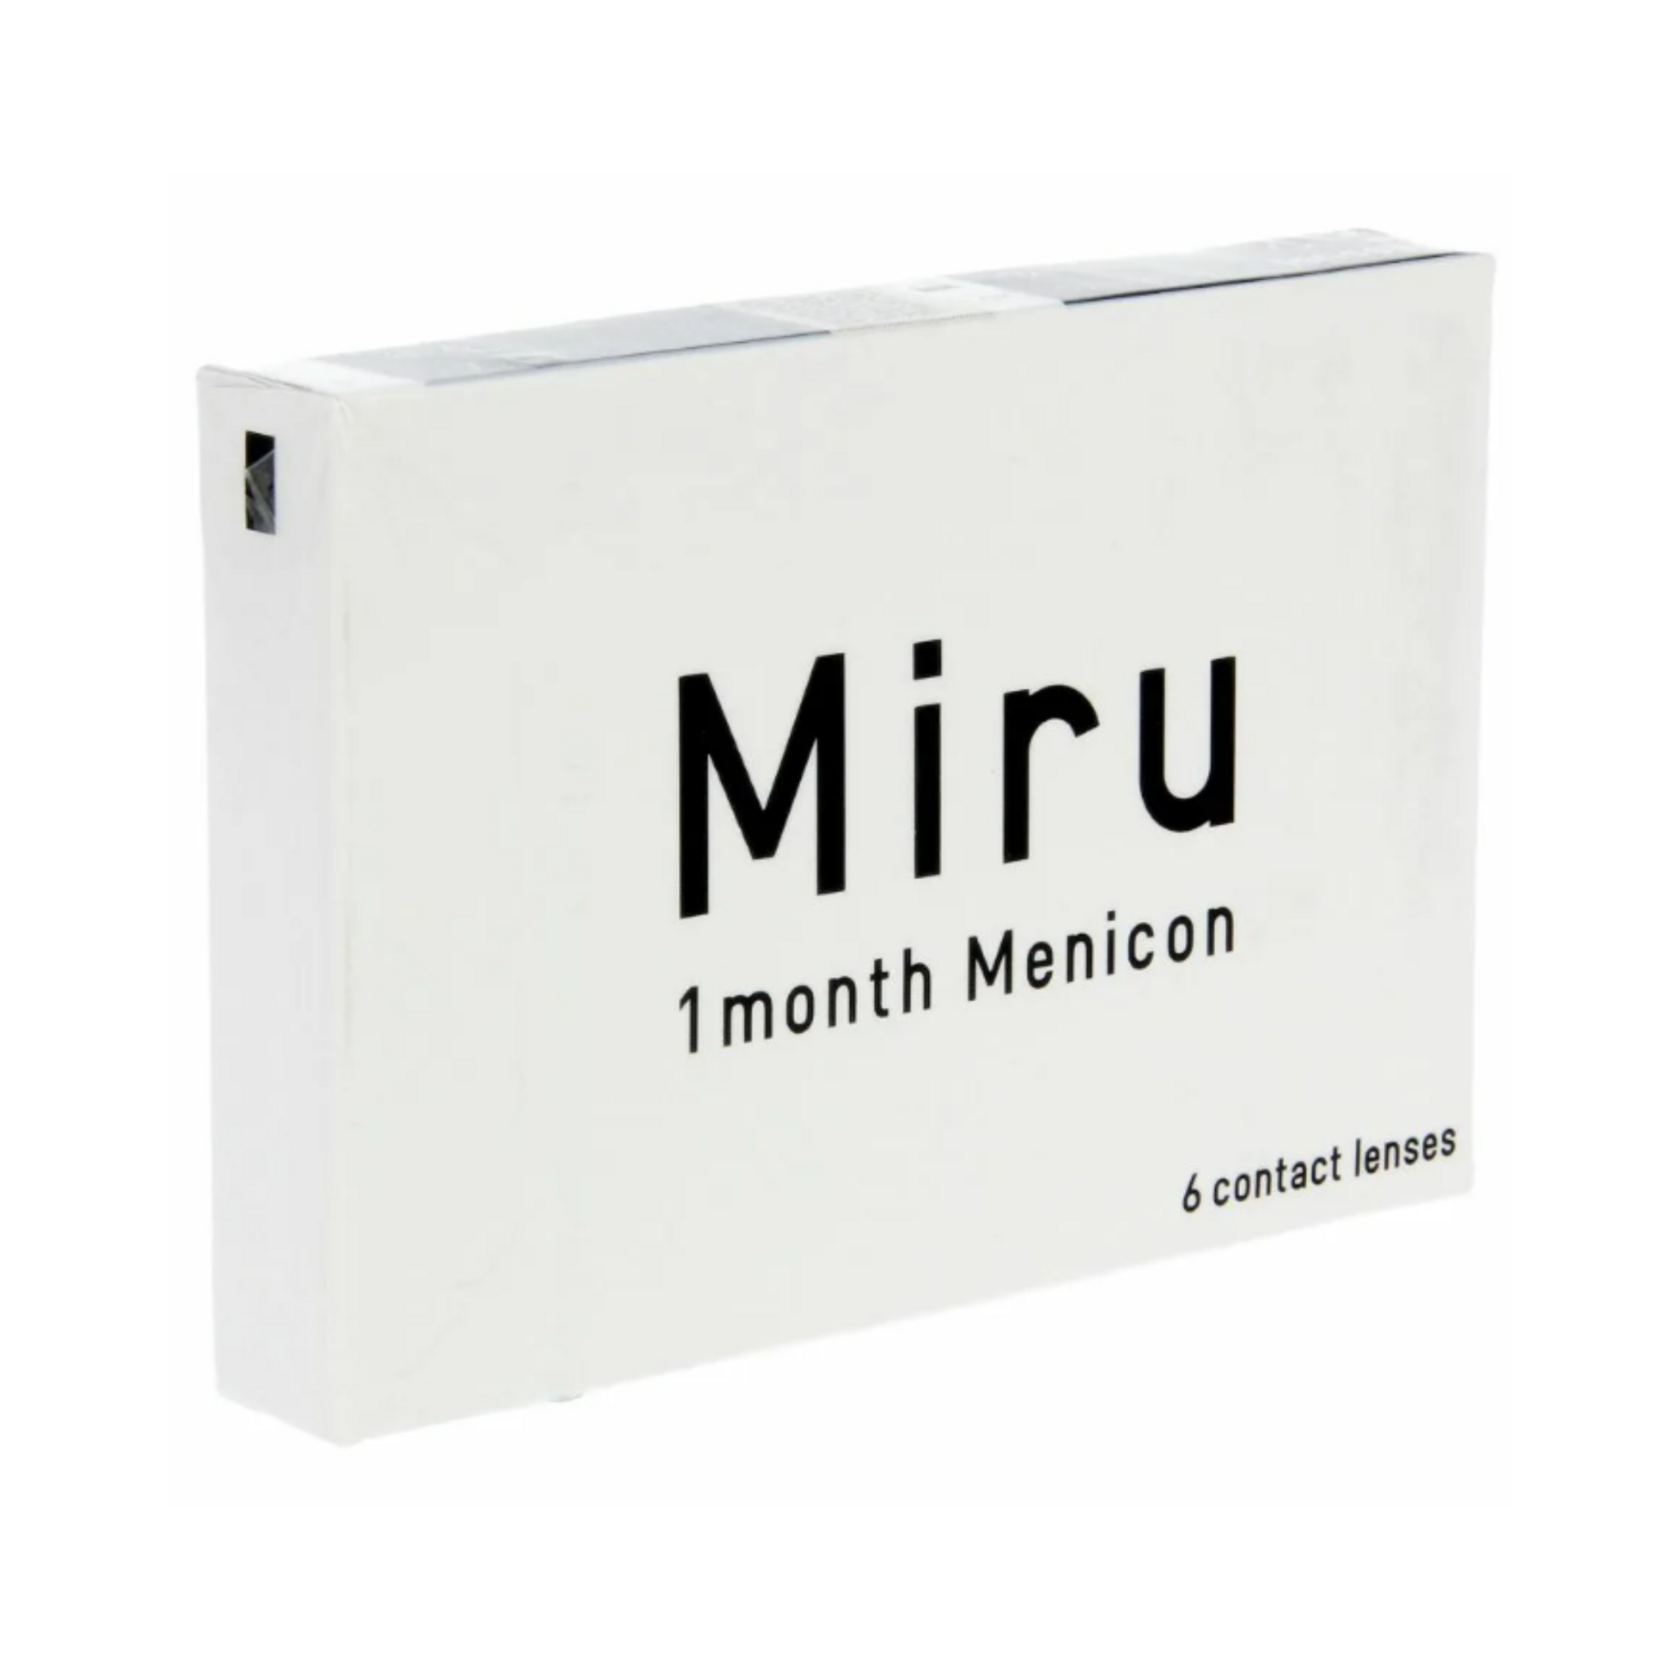 One month more. Menicon miru 1 month (6 линз). Miru 1 month Menicon. Miru 1 month Multifocal. Мультифокальные контактные линзы miru 1 month Multifocal Menicon.